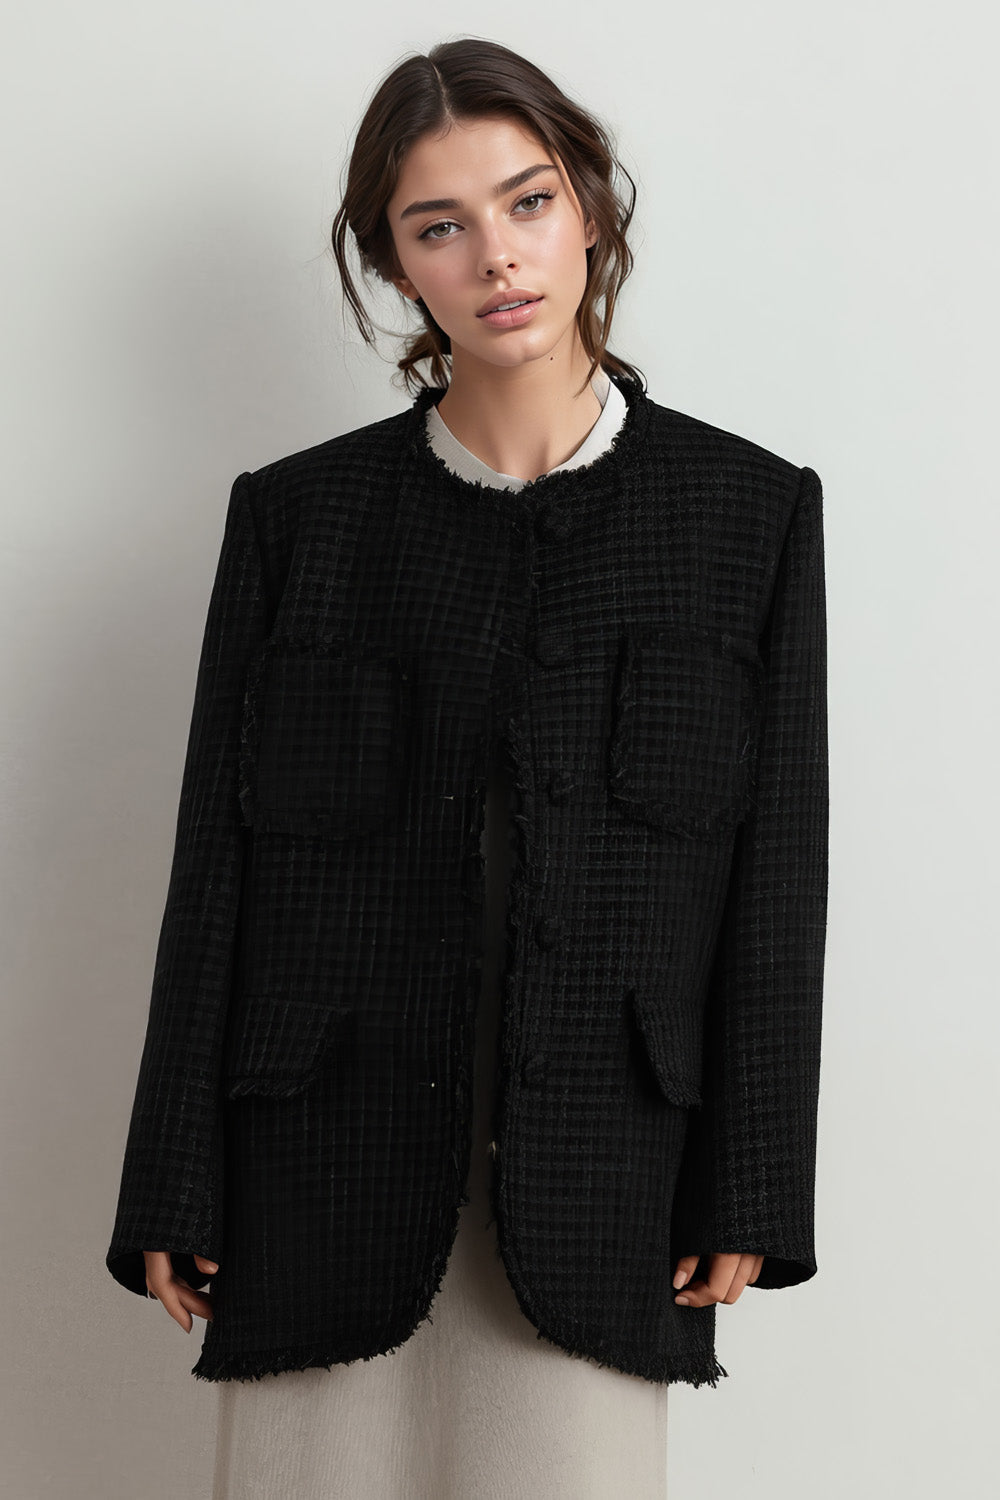 Elegant Tweed Jacket with Fringe - Black (Veste en tweed élégante avec franges)